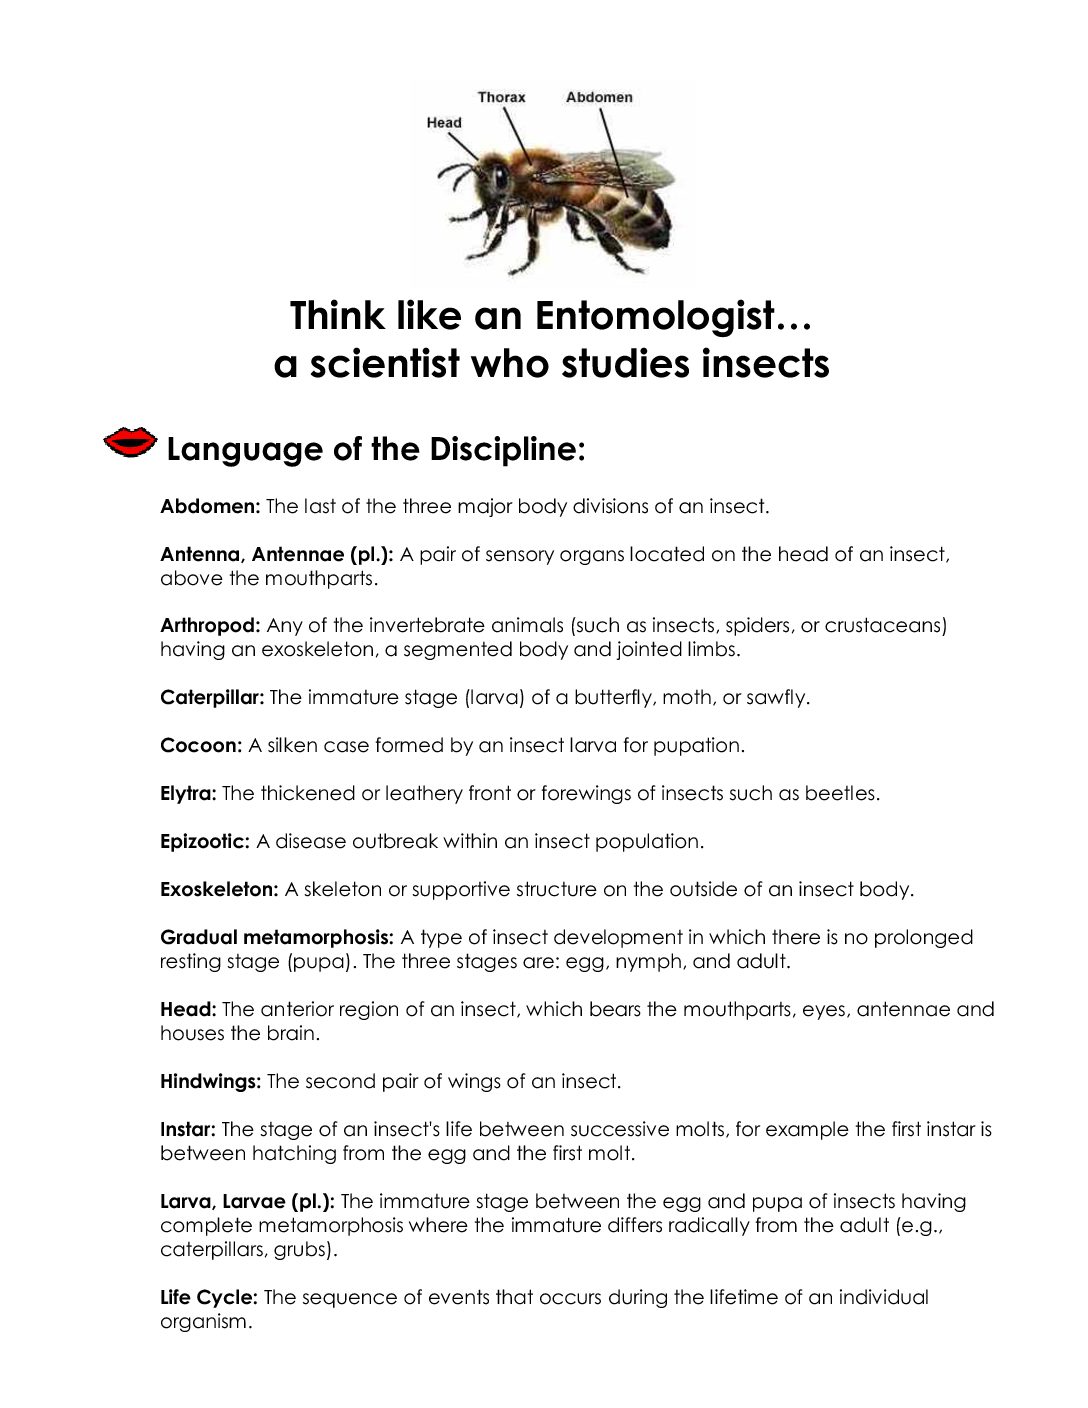 Think like an Entomologist sheet